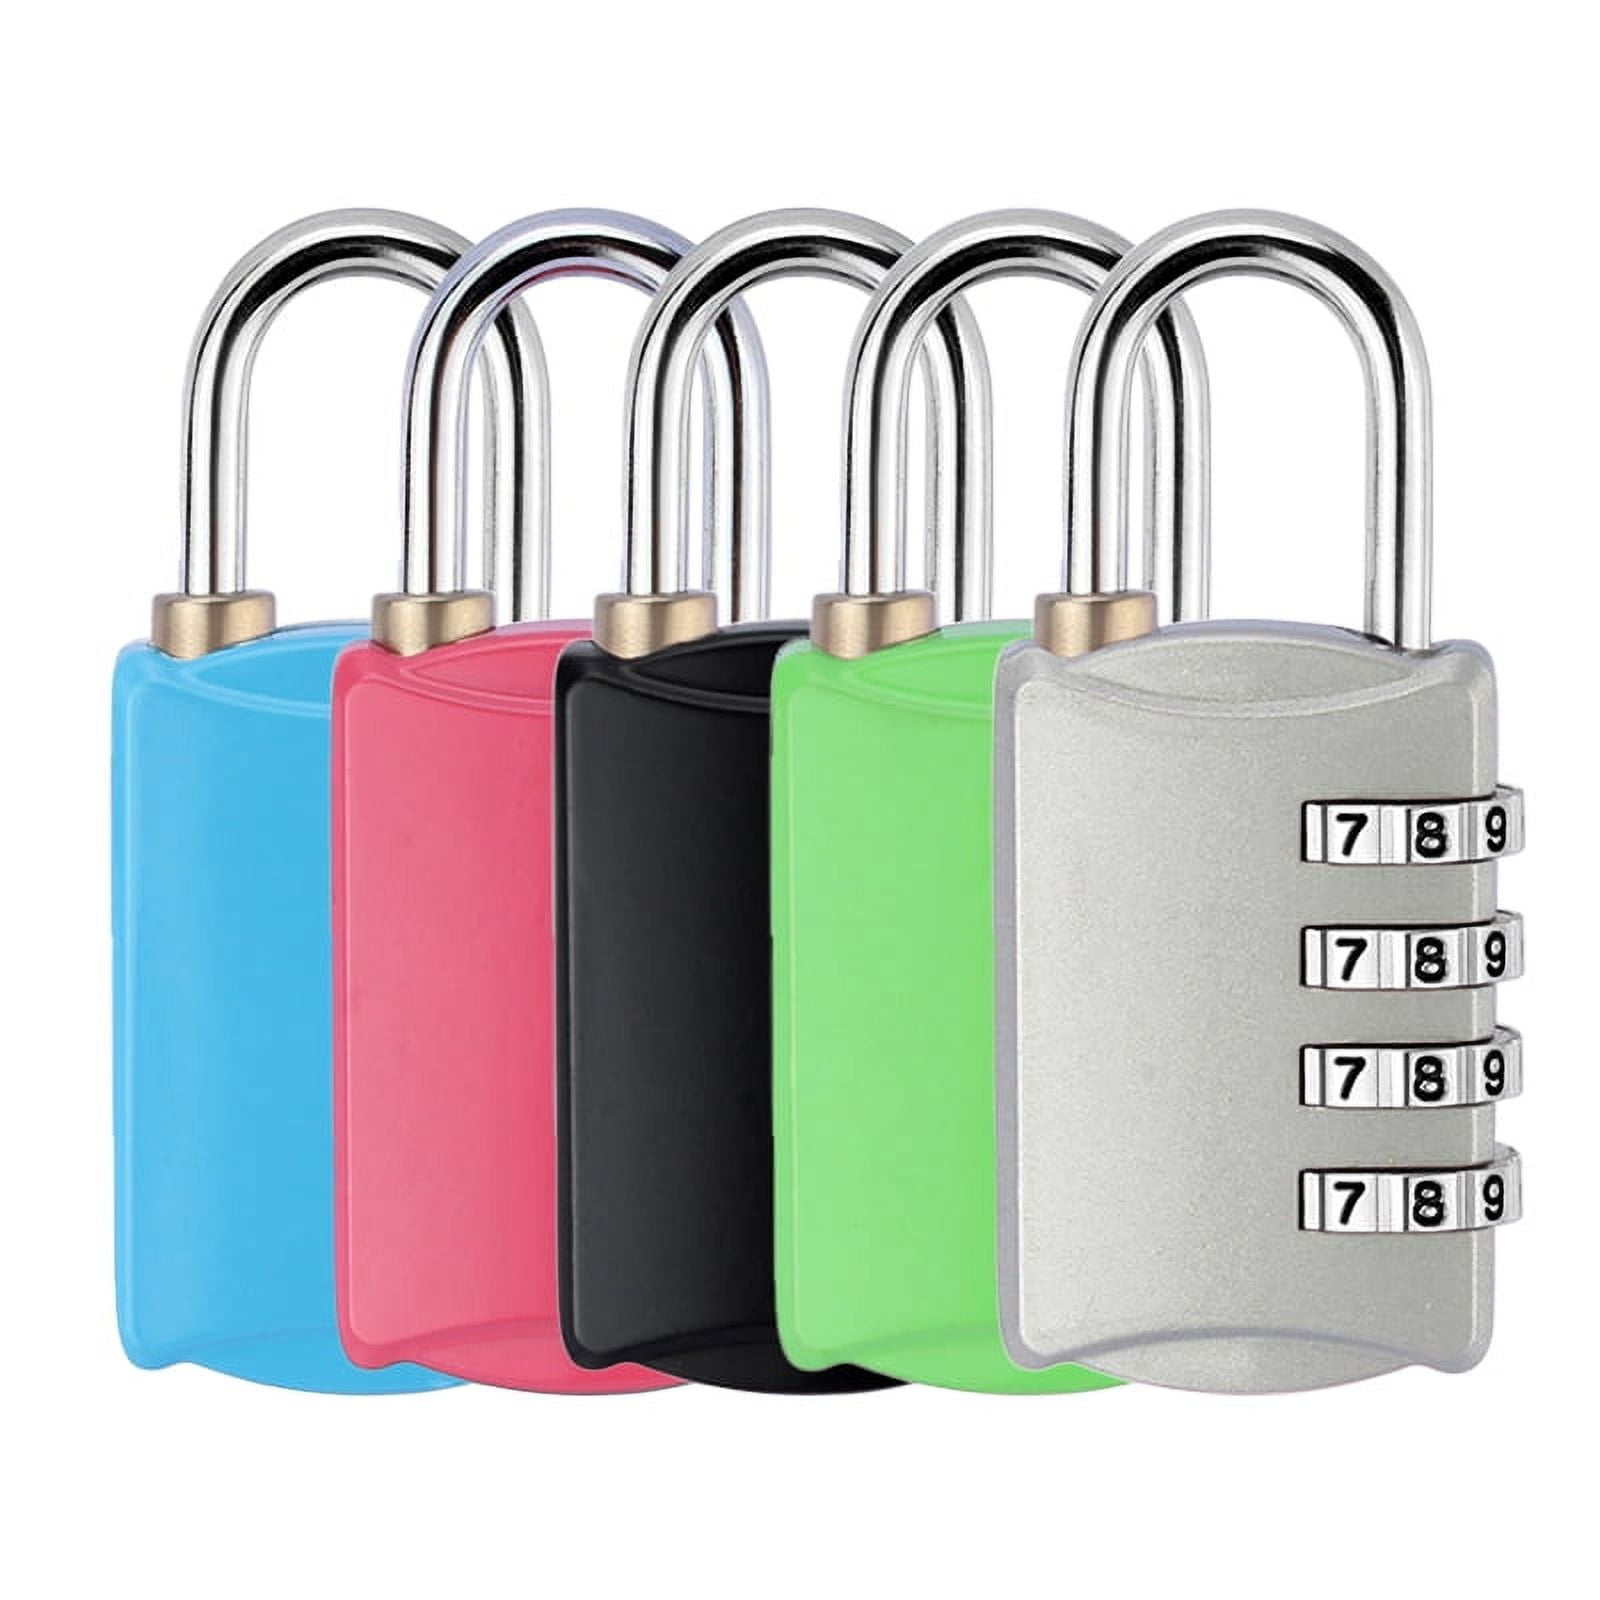 Combination Lock for Gym Lockers – Master Lock Locker Combination Padlock,  Pack, Blue – The Ideal Combo Lock for School/Gym Locker Security